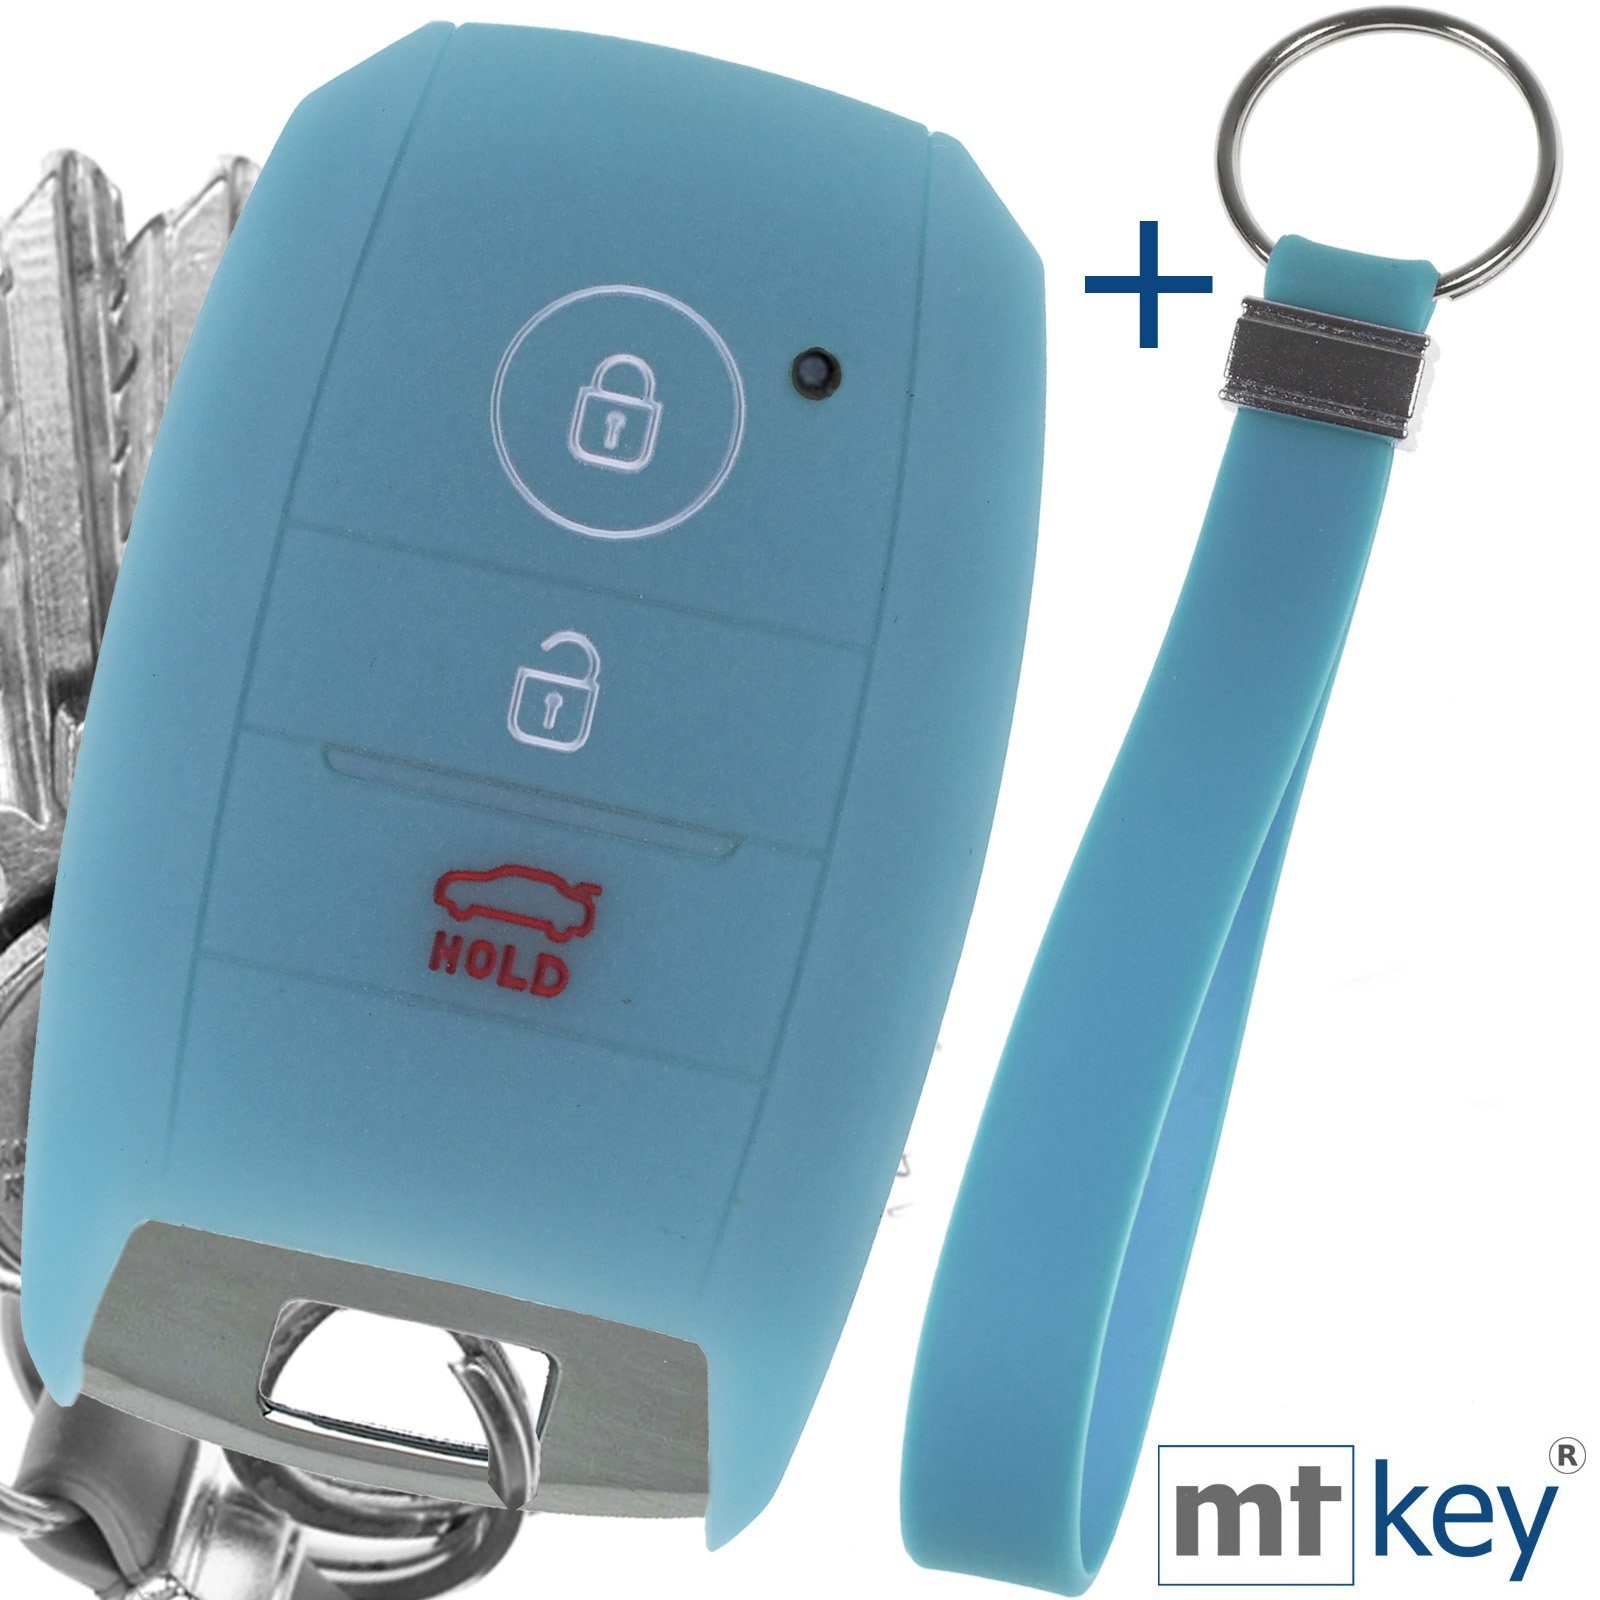 mt-key Schlüsseltasche Autoschlüssel Silikon Schutzhülle fluoreszierend Blau + Schlüsselband, für KIA Picantio Rio Ceed Soul Sportage Stonic 3 Tasten KEYLESS